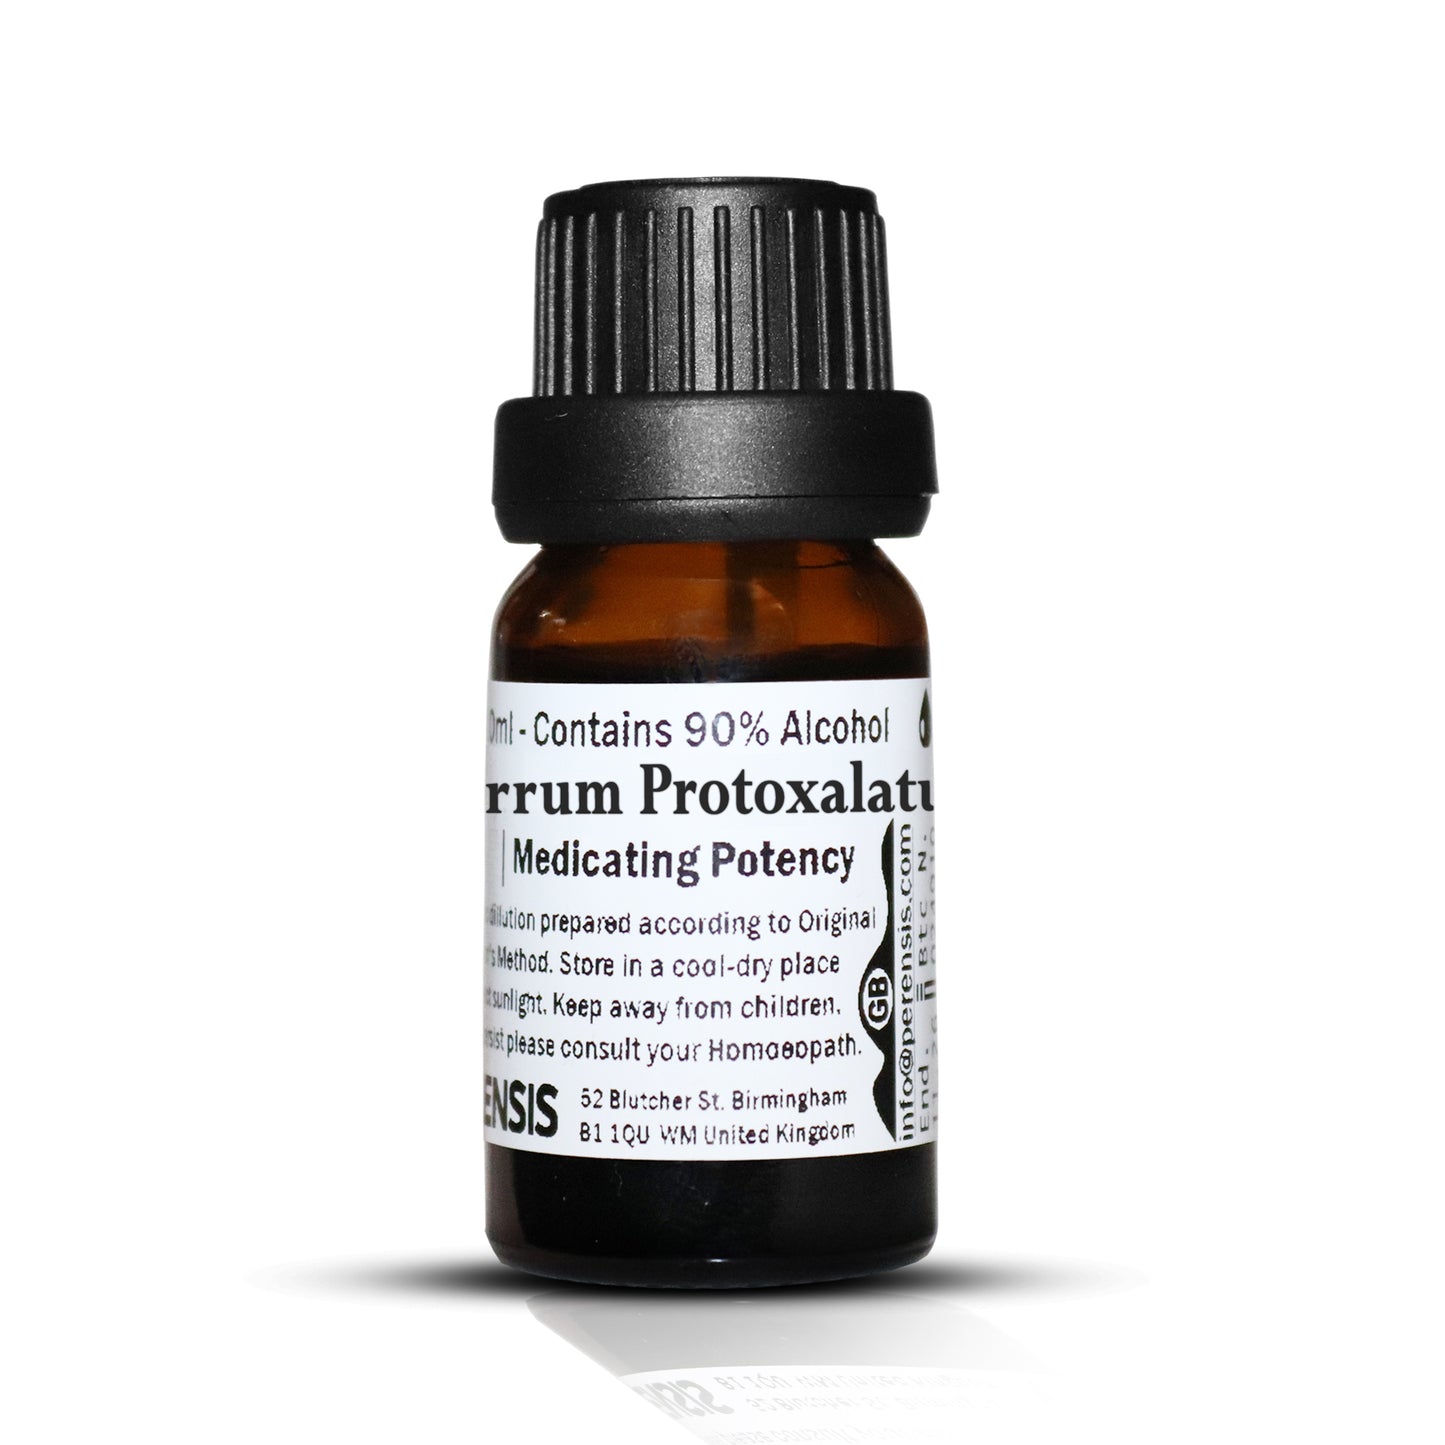 Ferrum Protoxalatum